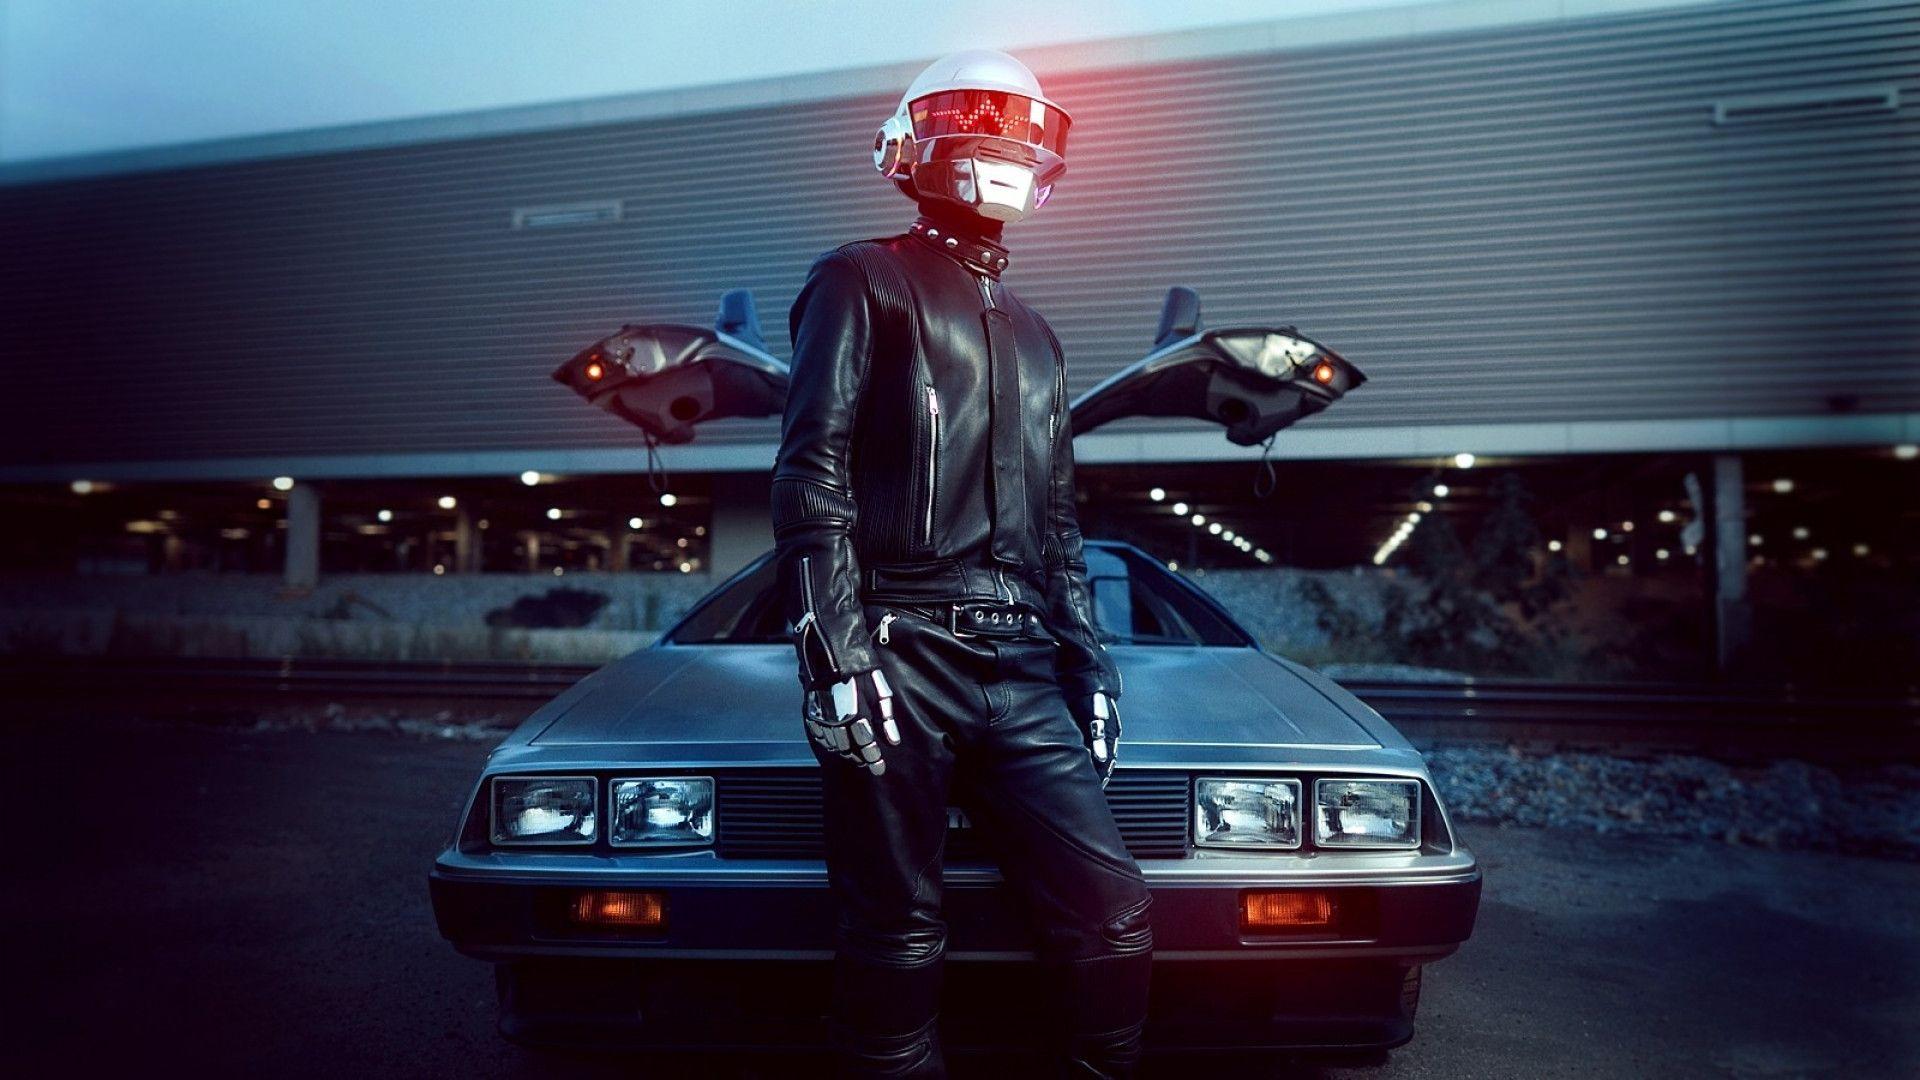 Daft Punk Helmet DeLorean Car Desktop Wallpaper